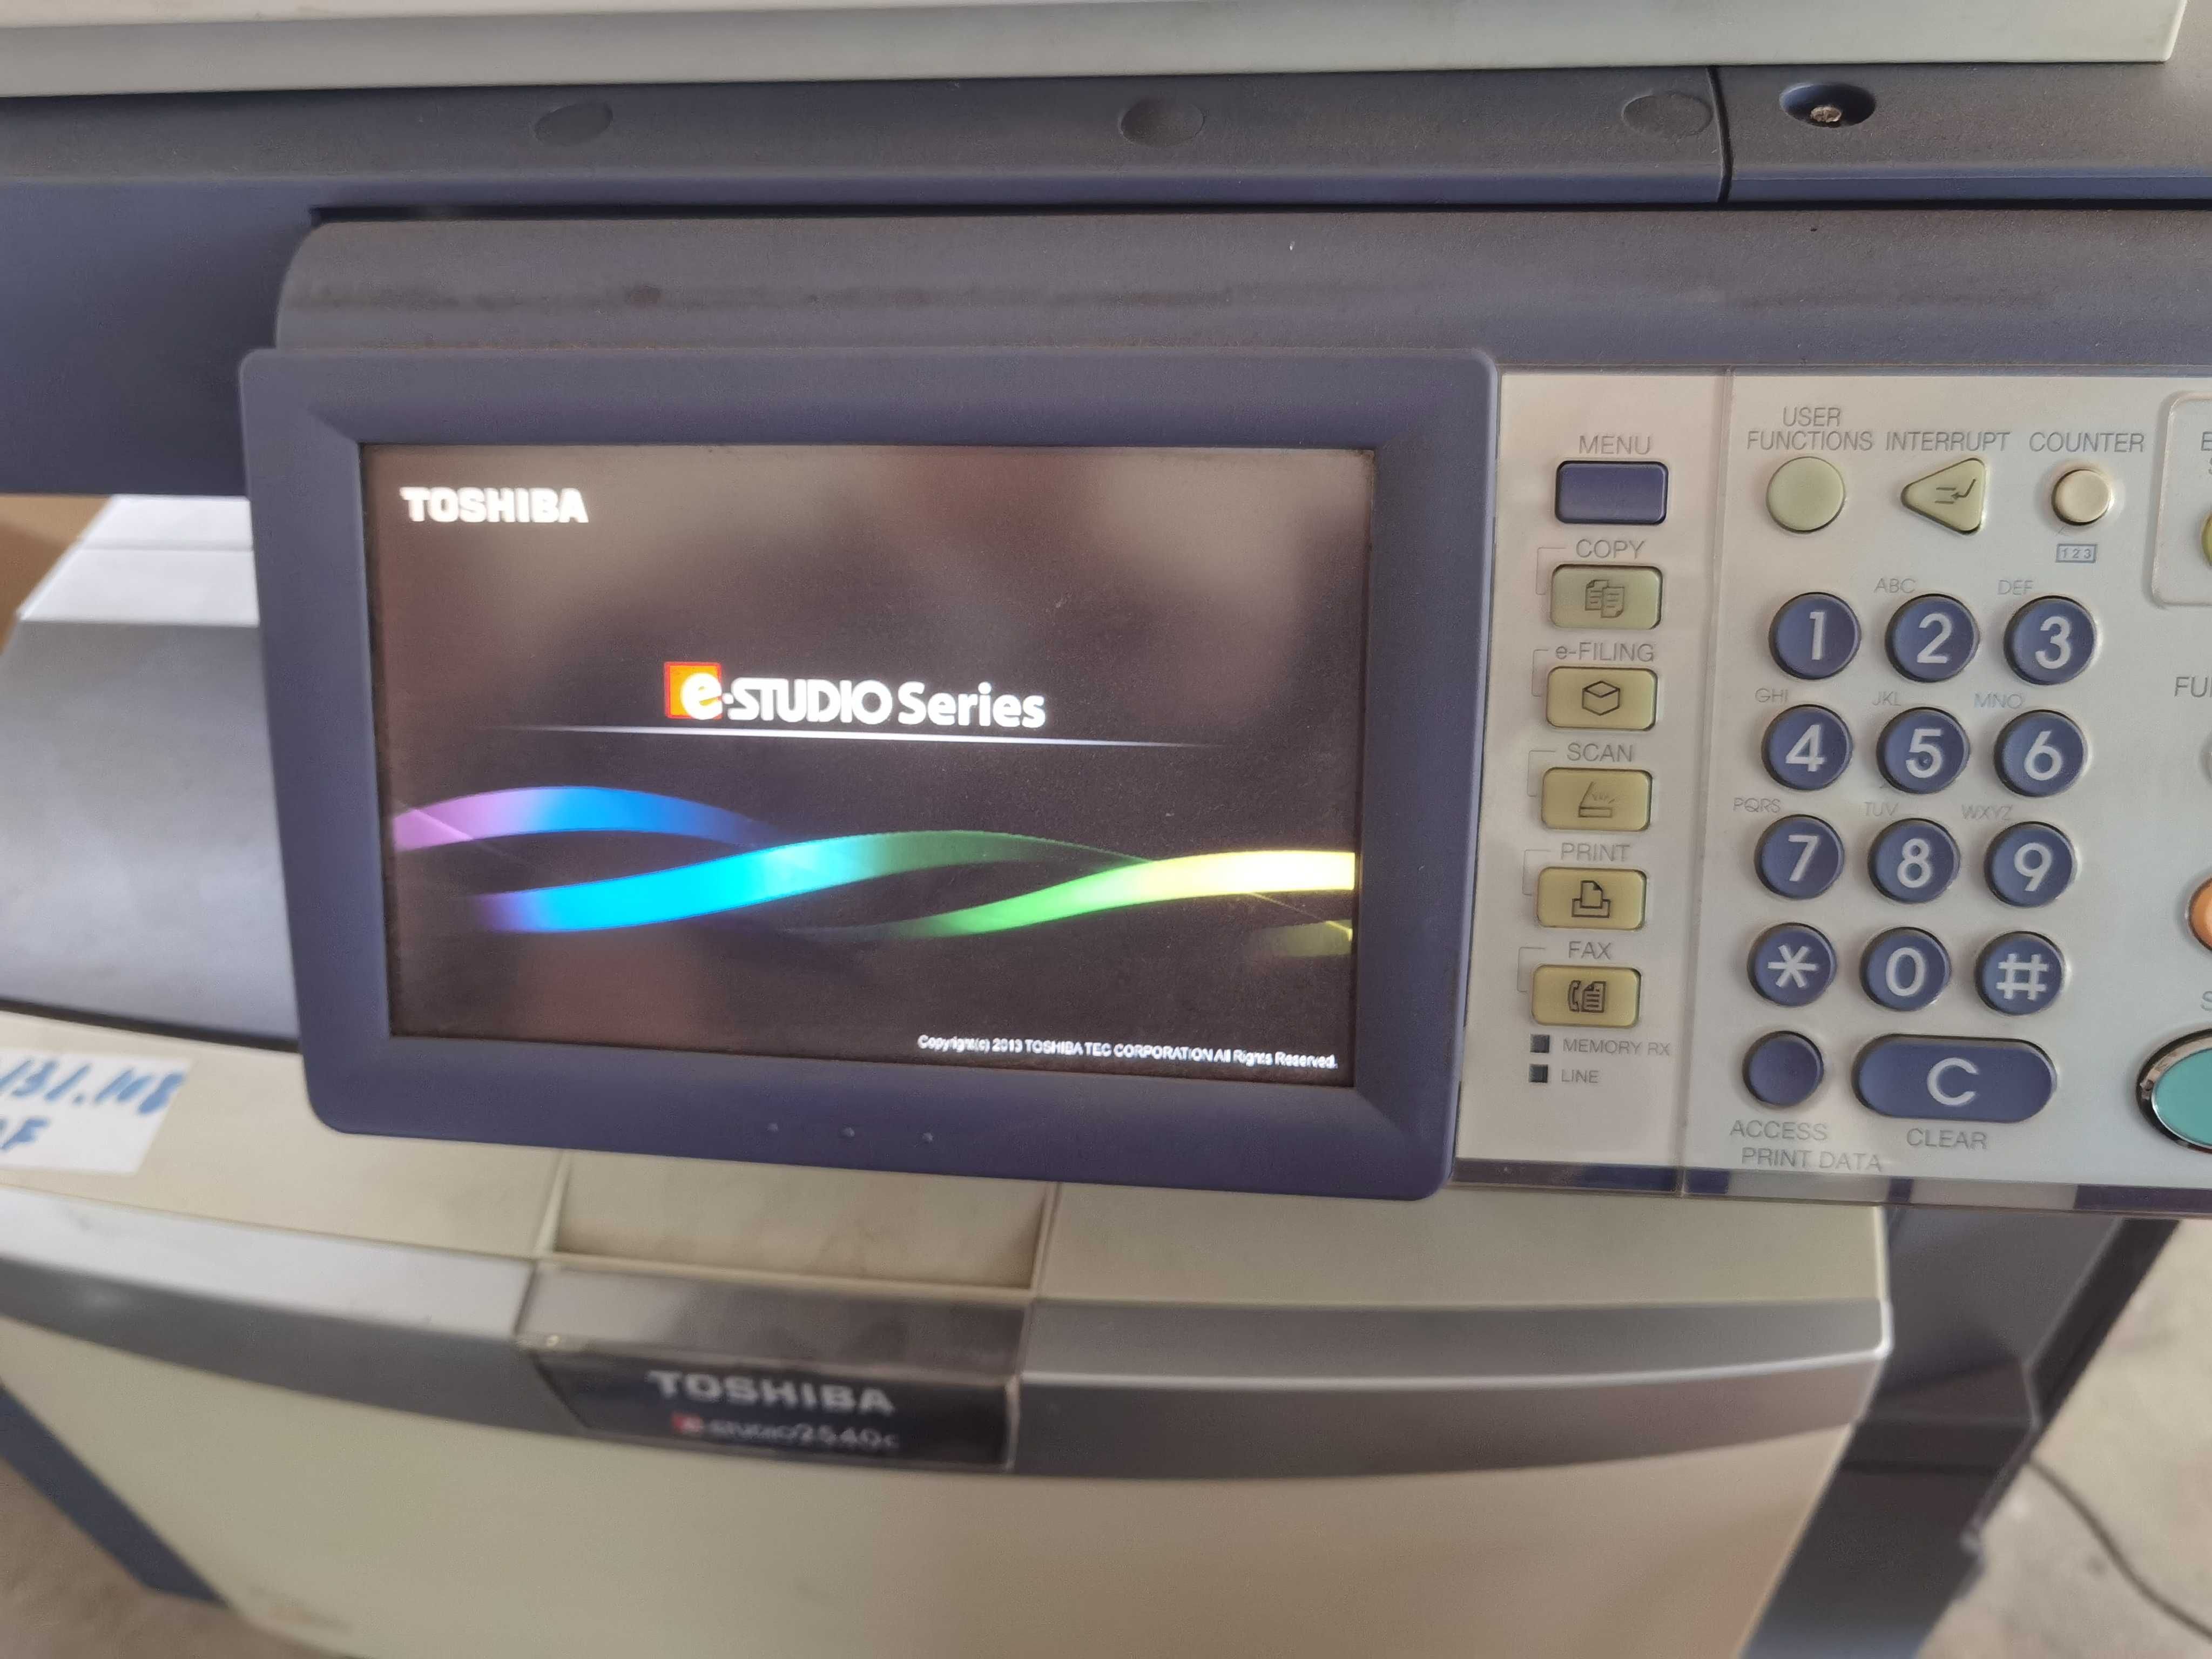 Xerox copiator  scanner Toshiba 2540C color perfect functional